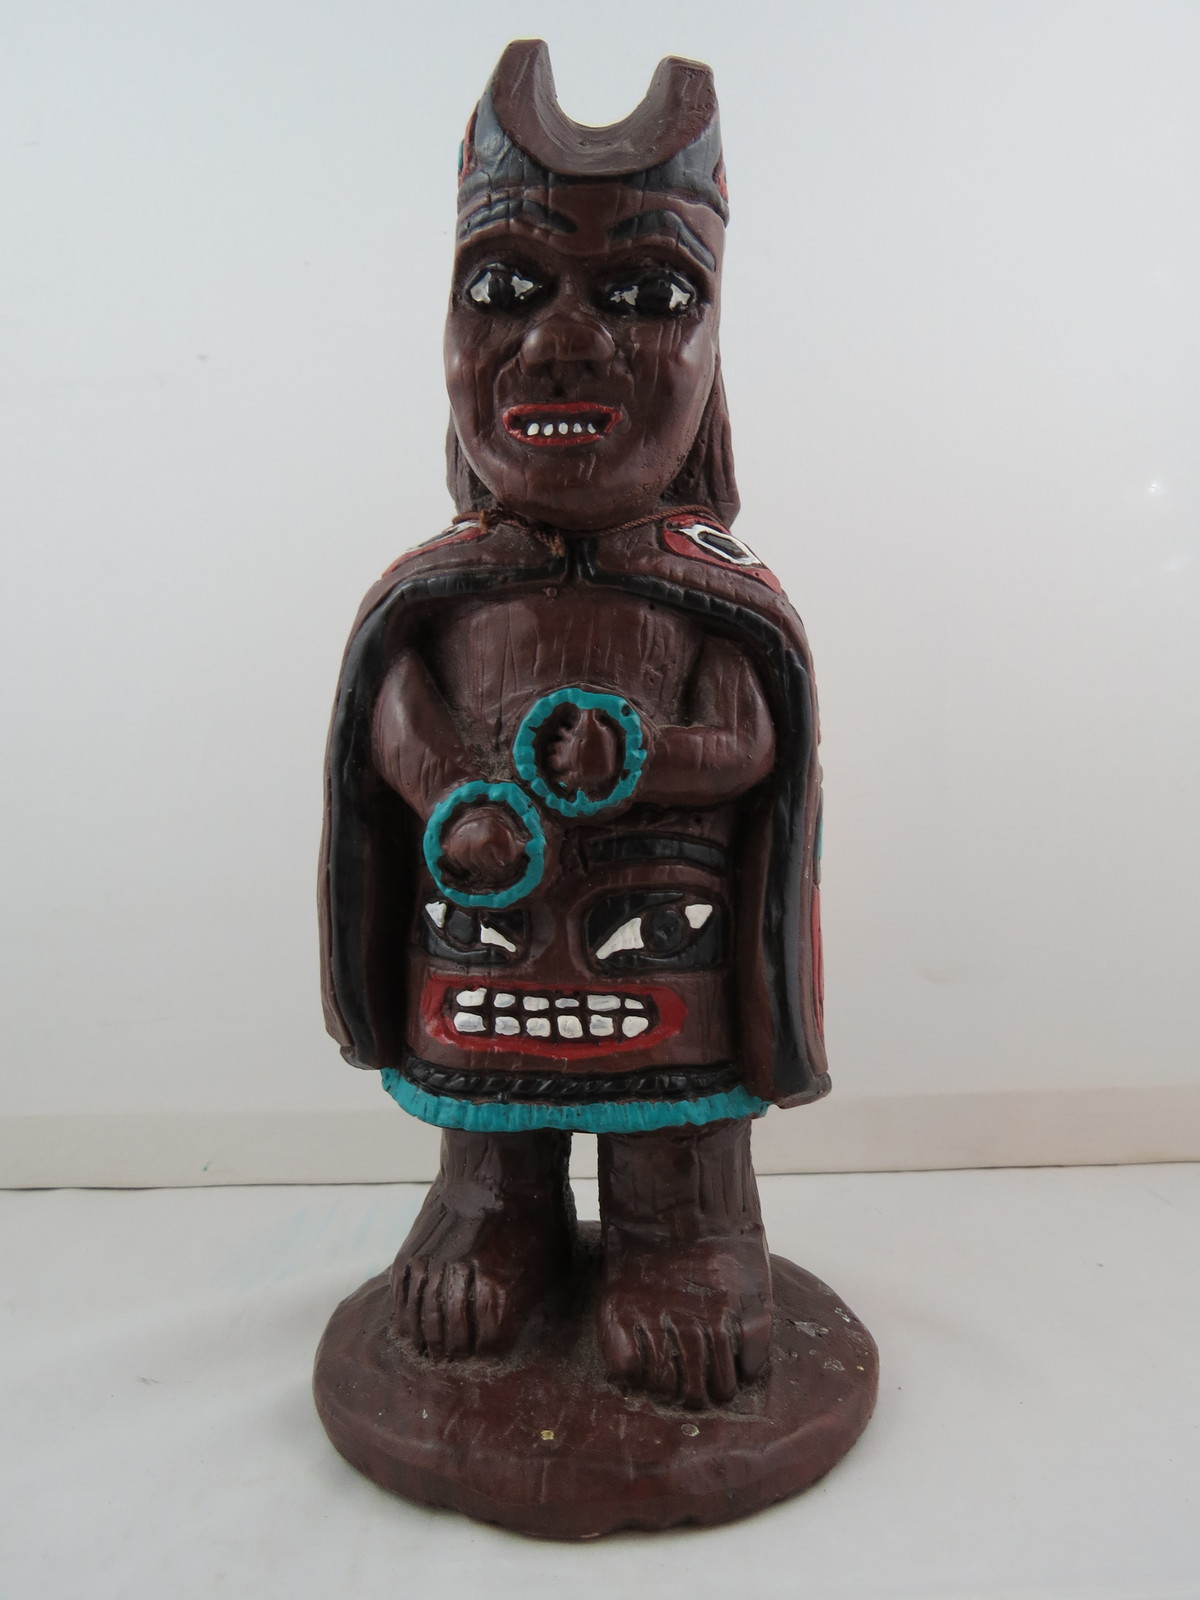 Vintage Medicine Man Figruine - By Shamans of Canada - Resin Casting - NWT - $85.00